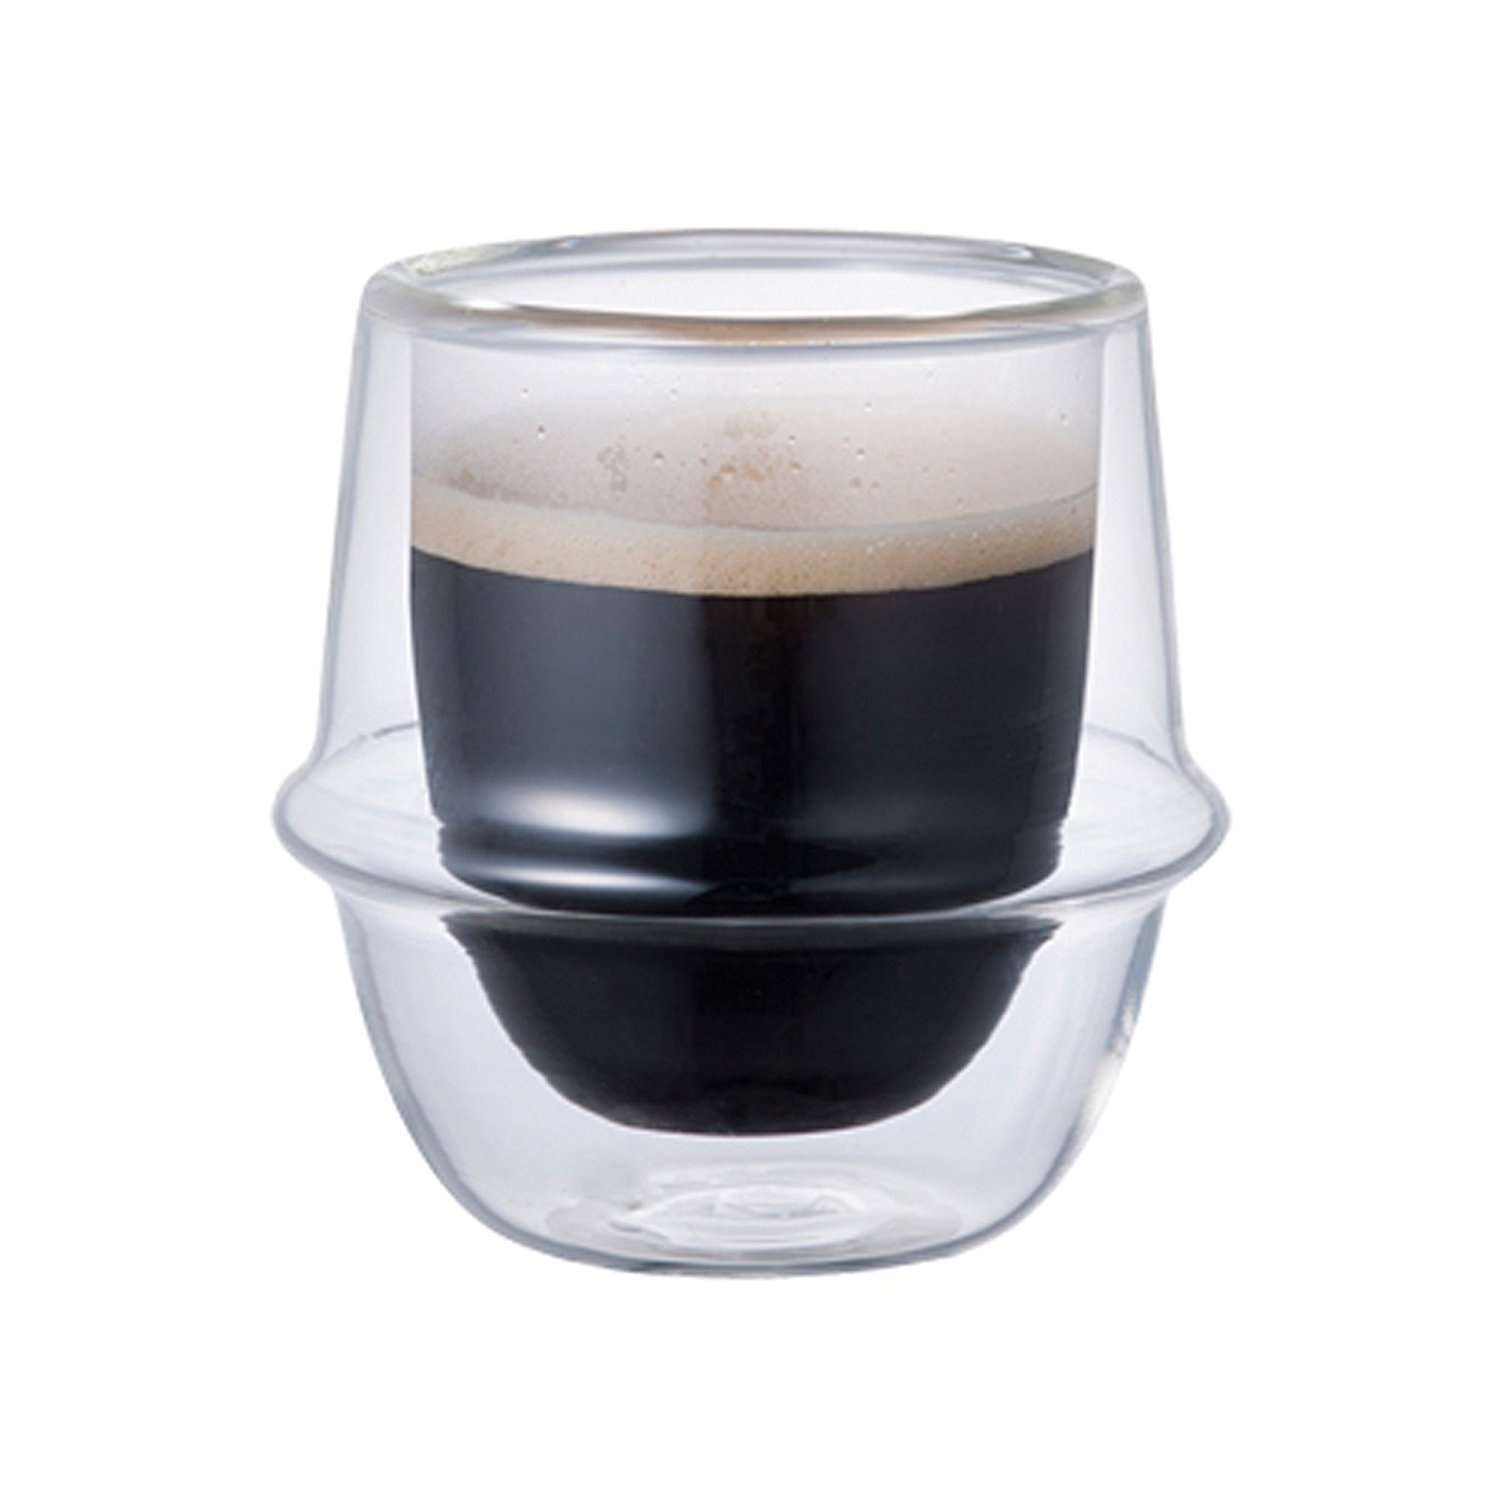 Kinto Set of 2 Double-Walled KRONOS 80 ml Espresso Cups - Maintain Temperature - Prevent Condensation